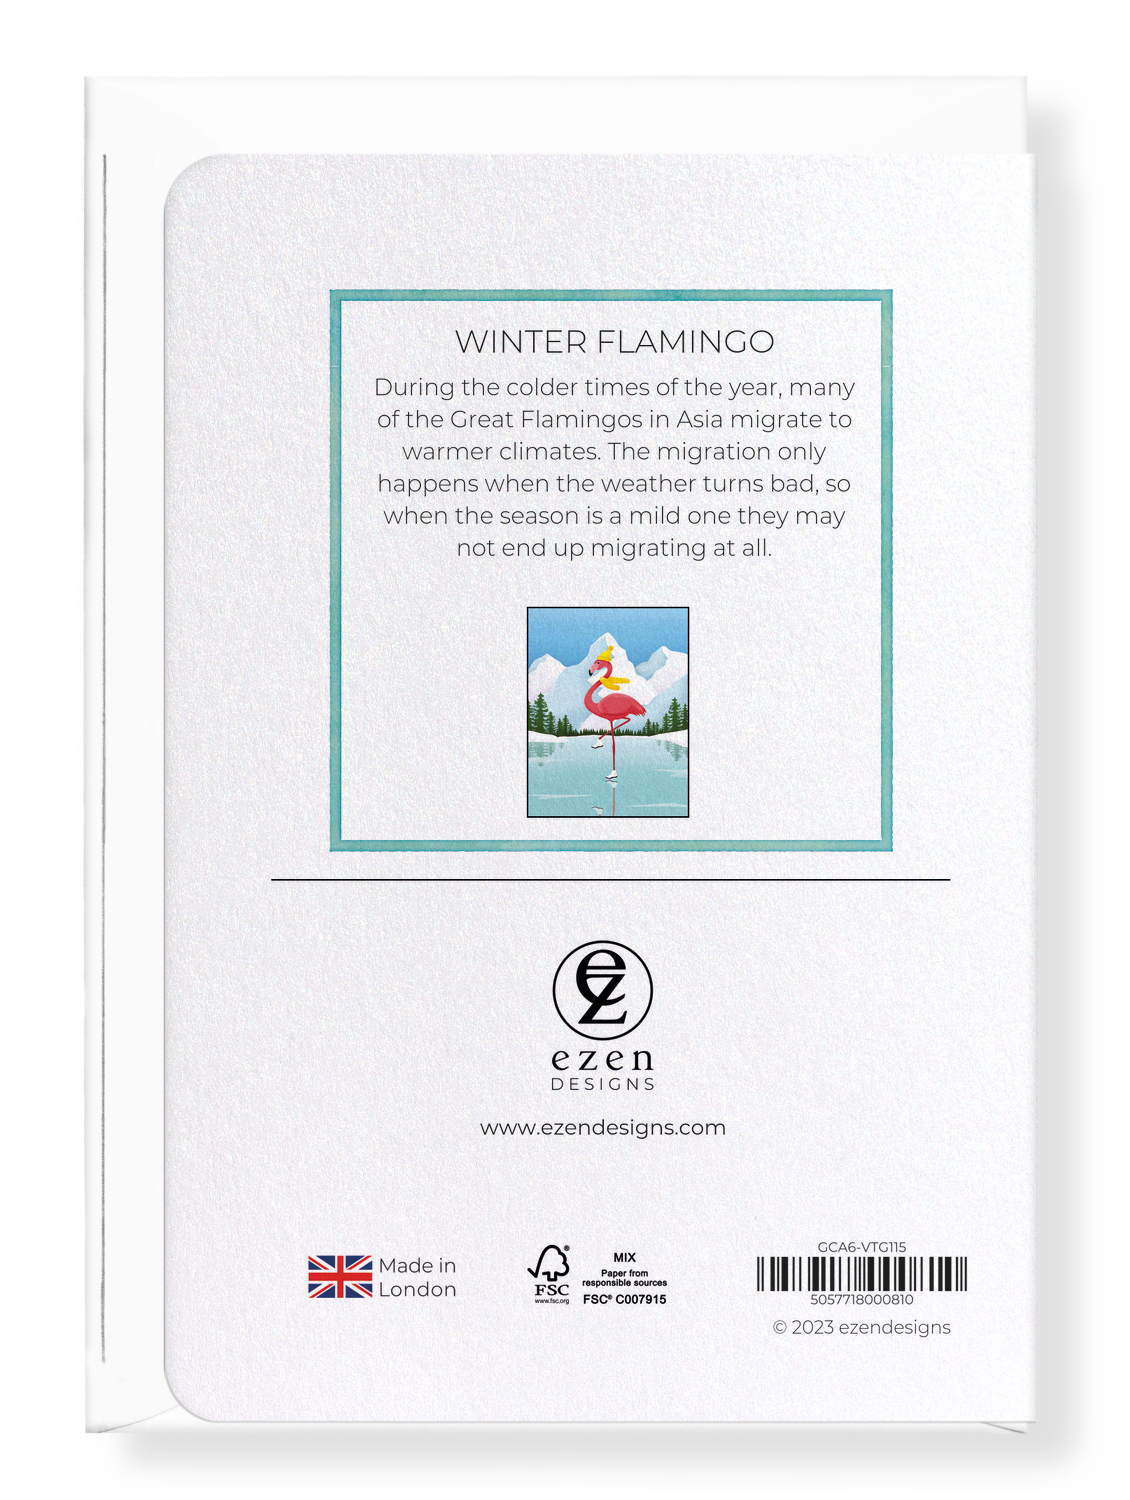 Ezen Designs - Winter flamingo - Greeting Card - Back